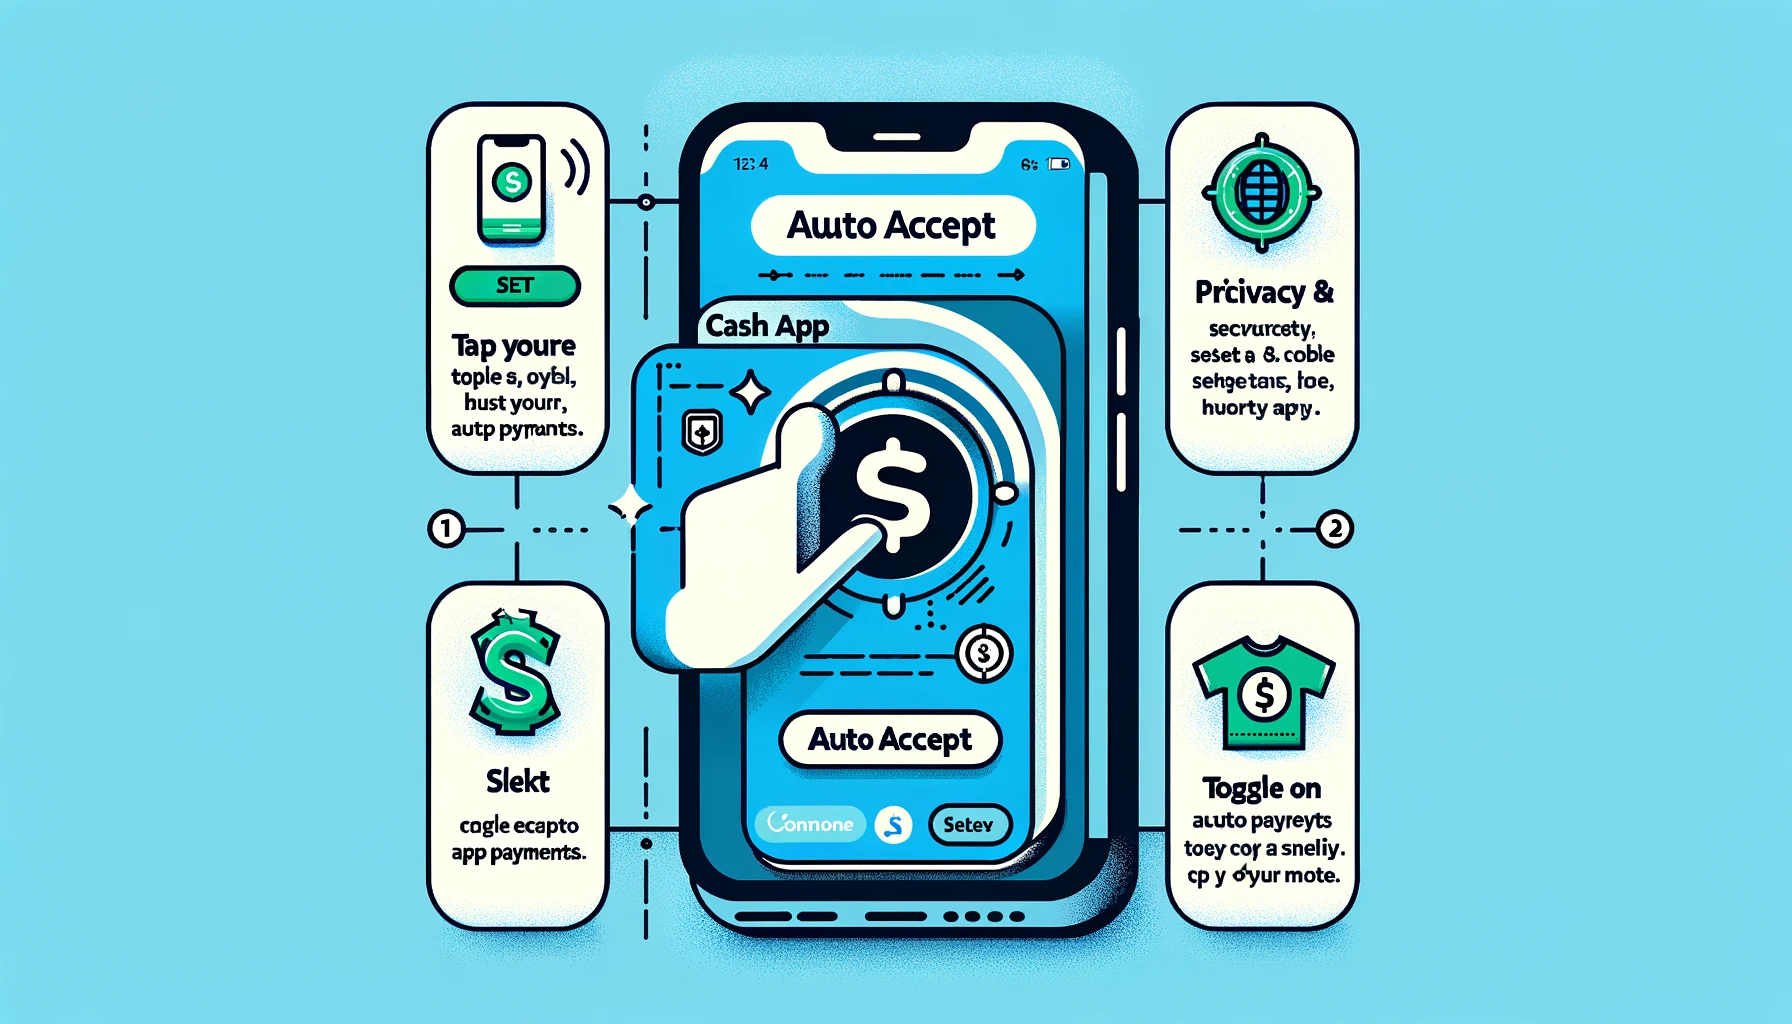 How to Set Auto Accept on Cash App